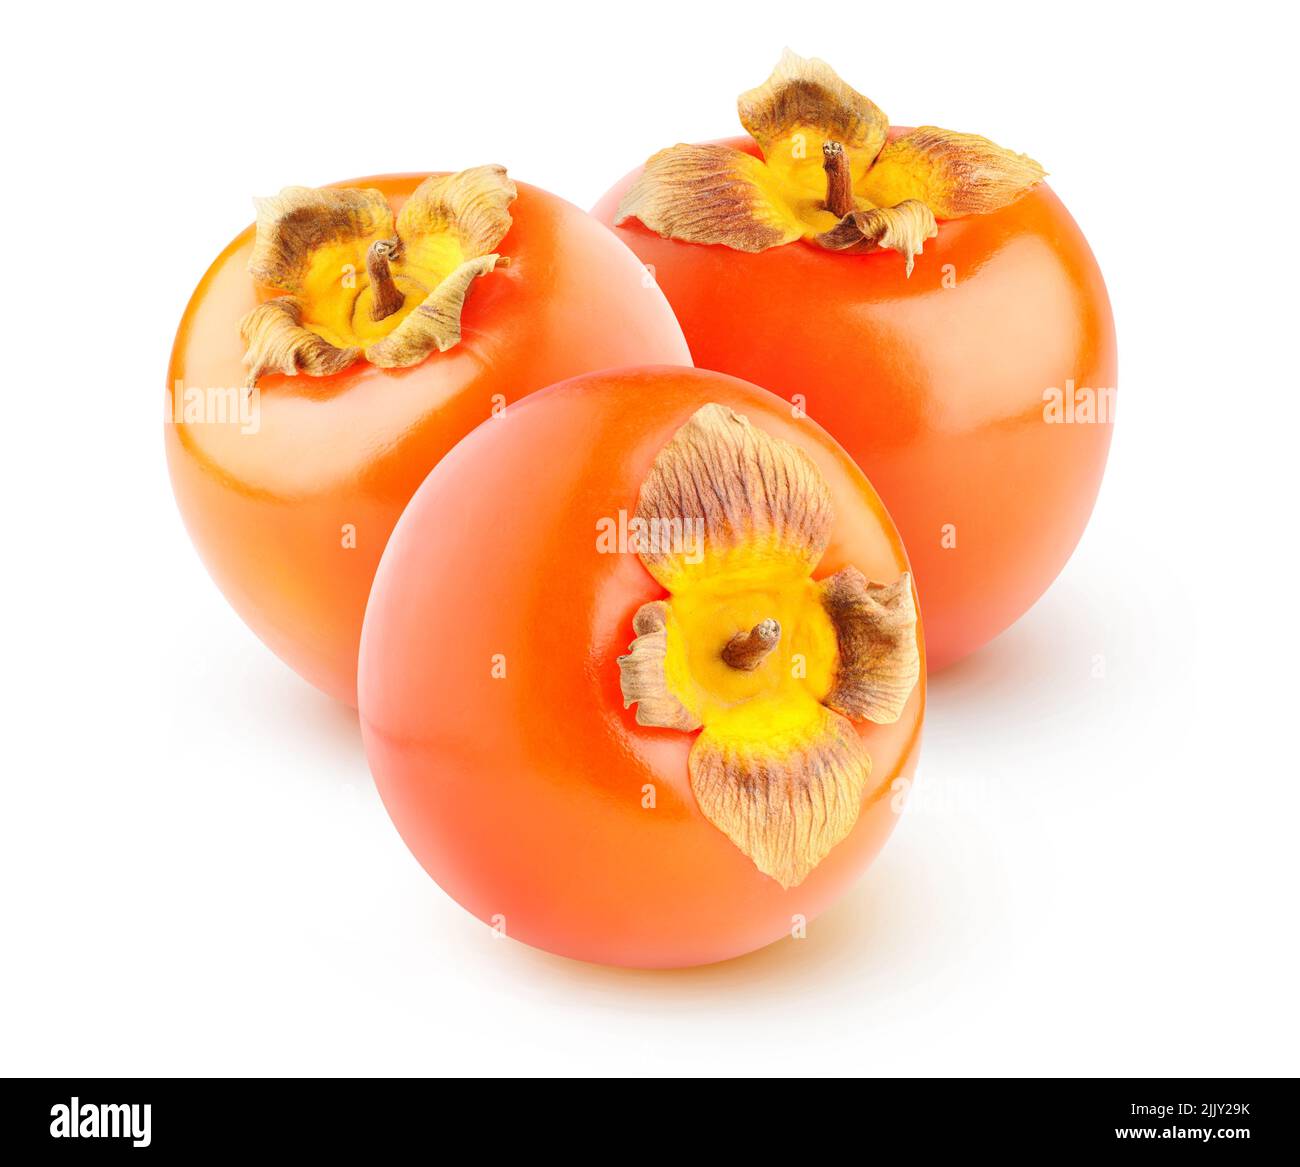 Three persimmon (kaki) fruits isolated on white background Stock Photo